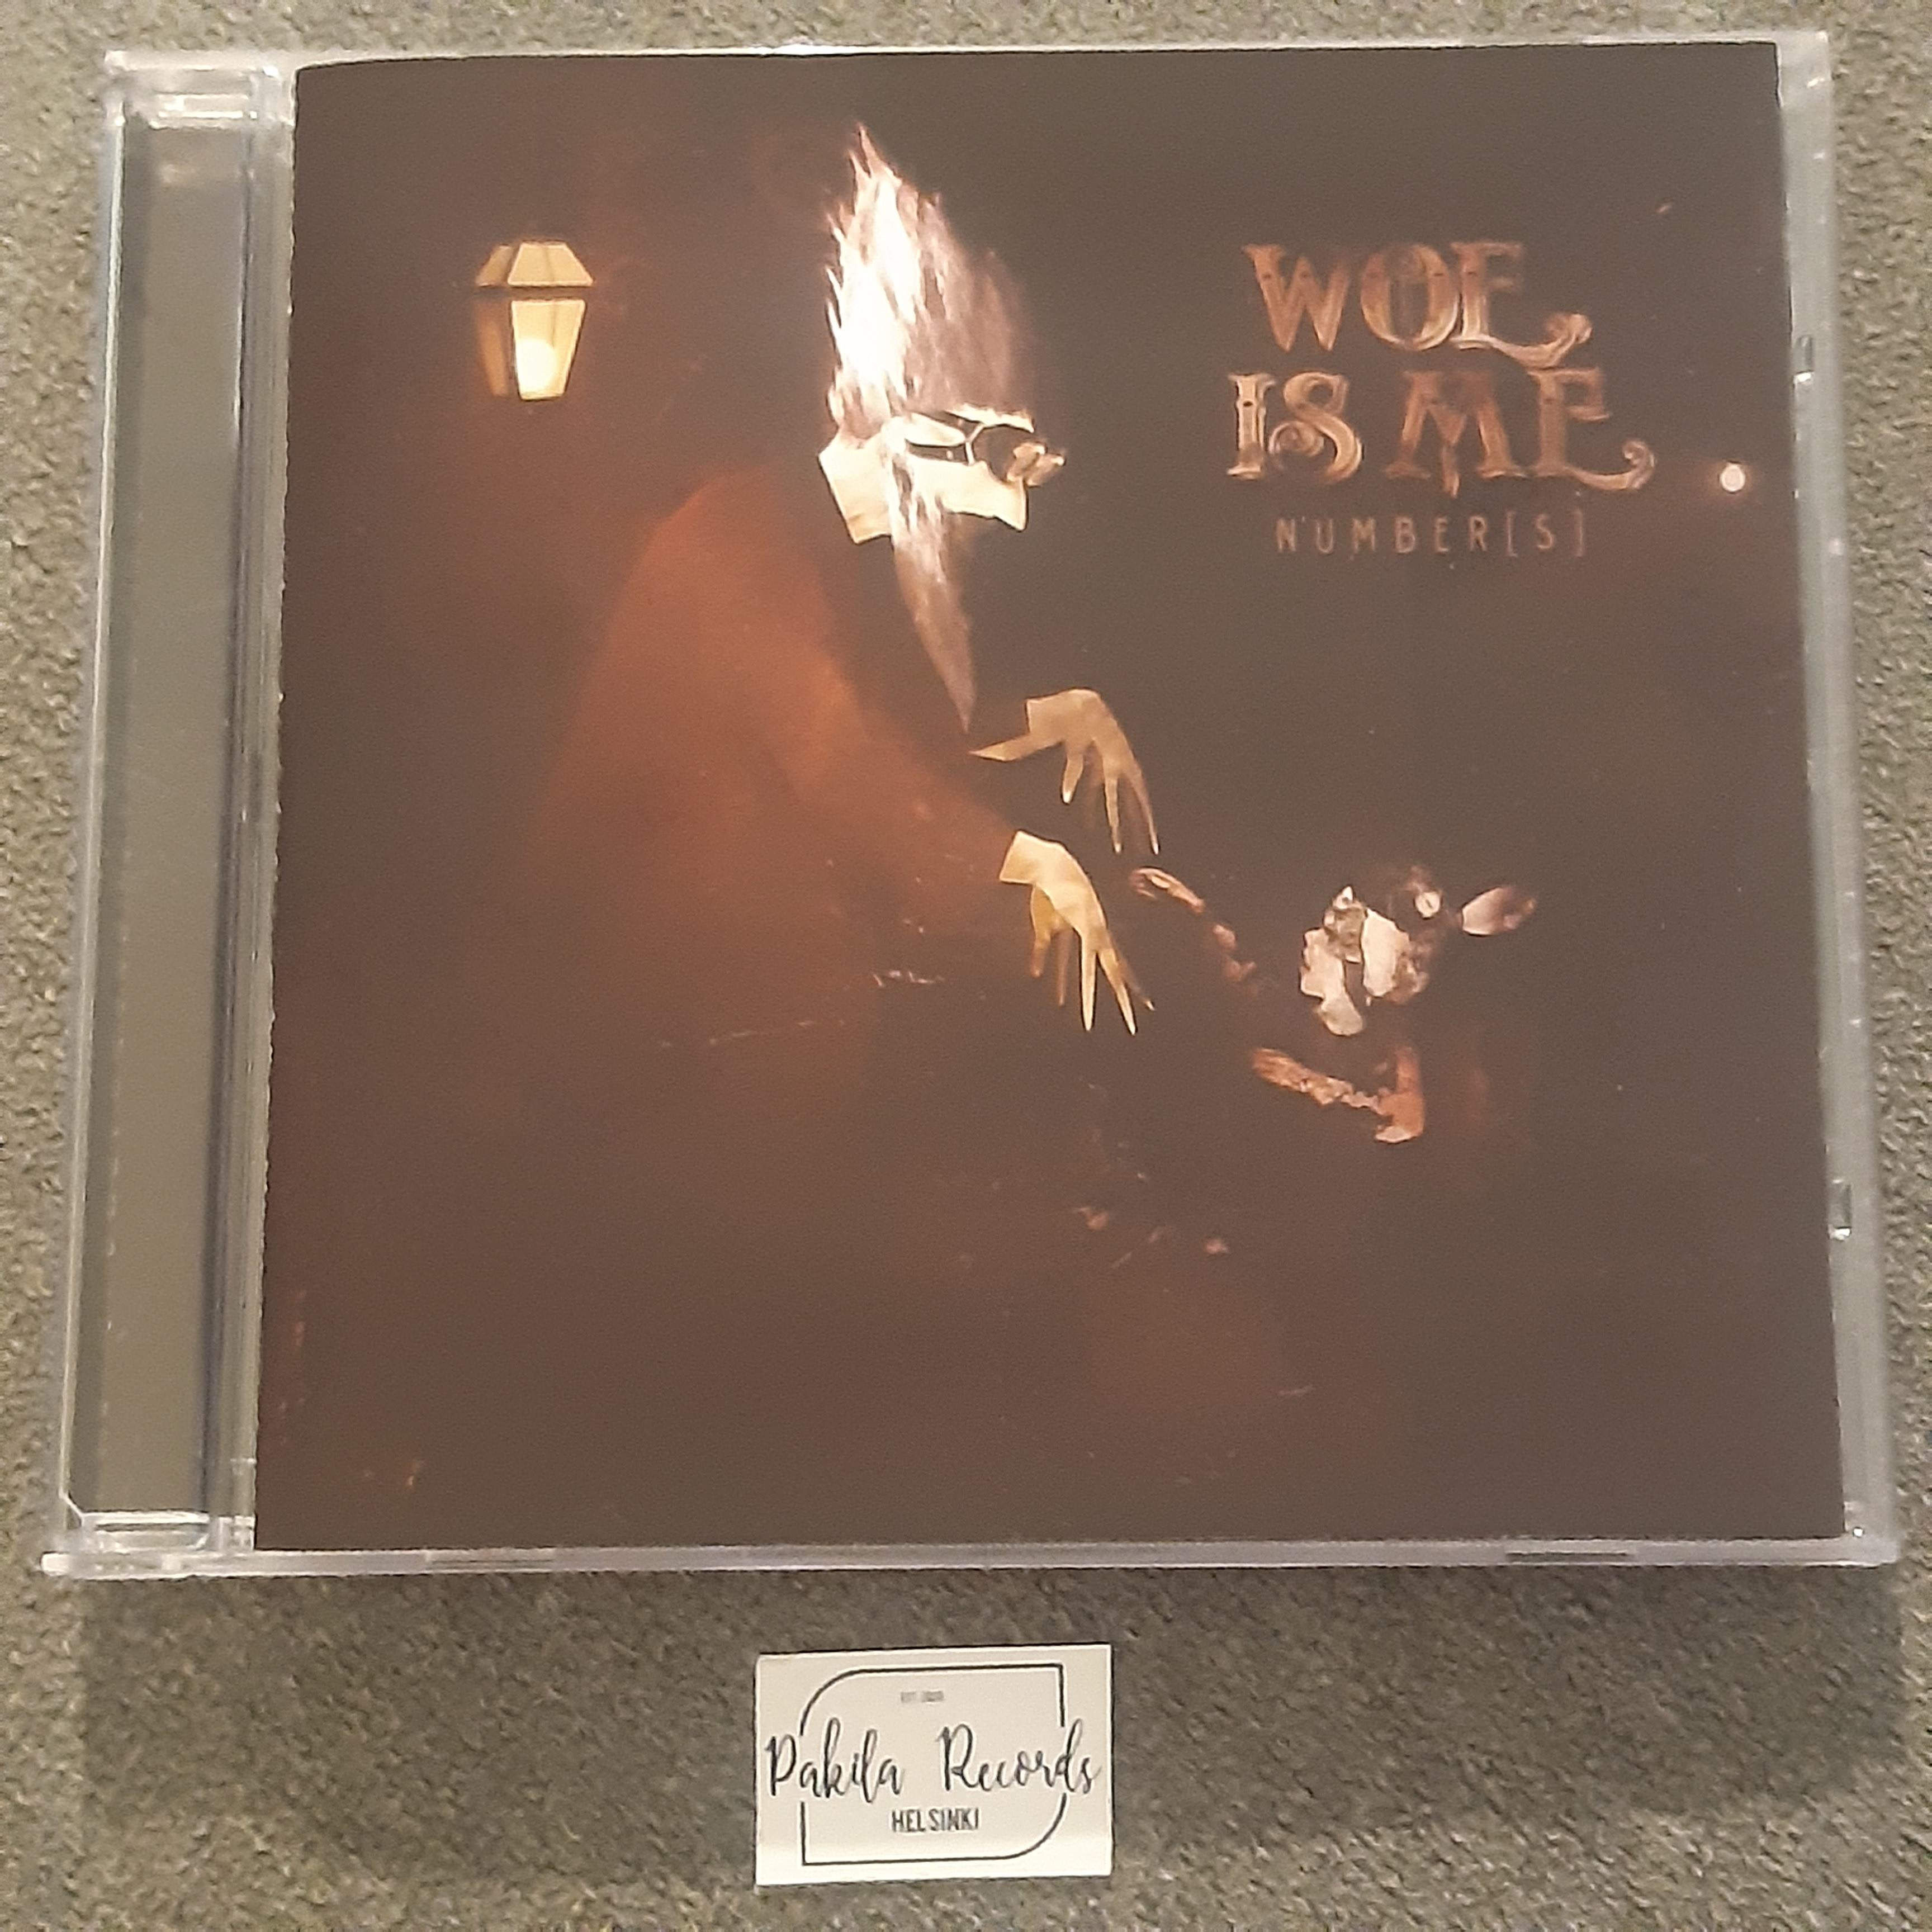 Woe, Is Me - Number(s) - CD (käytetty)